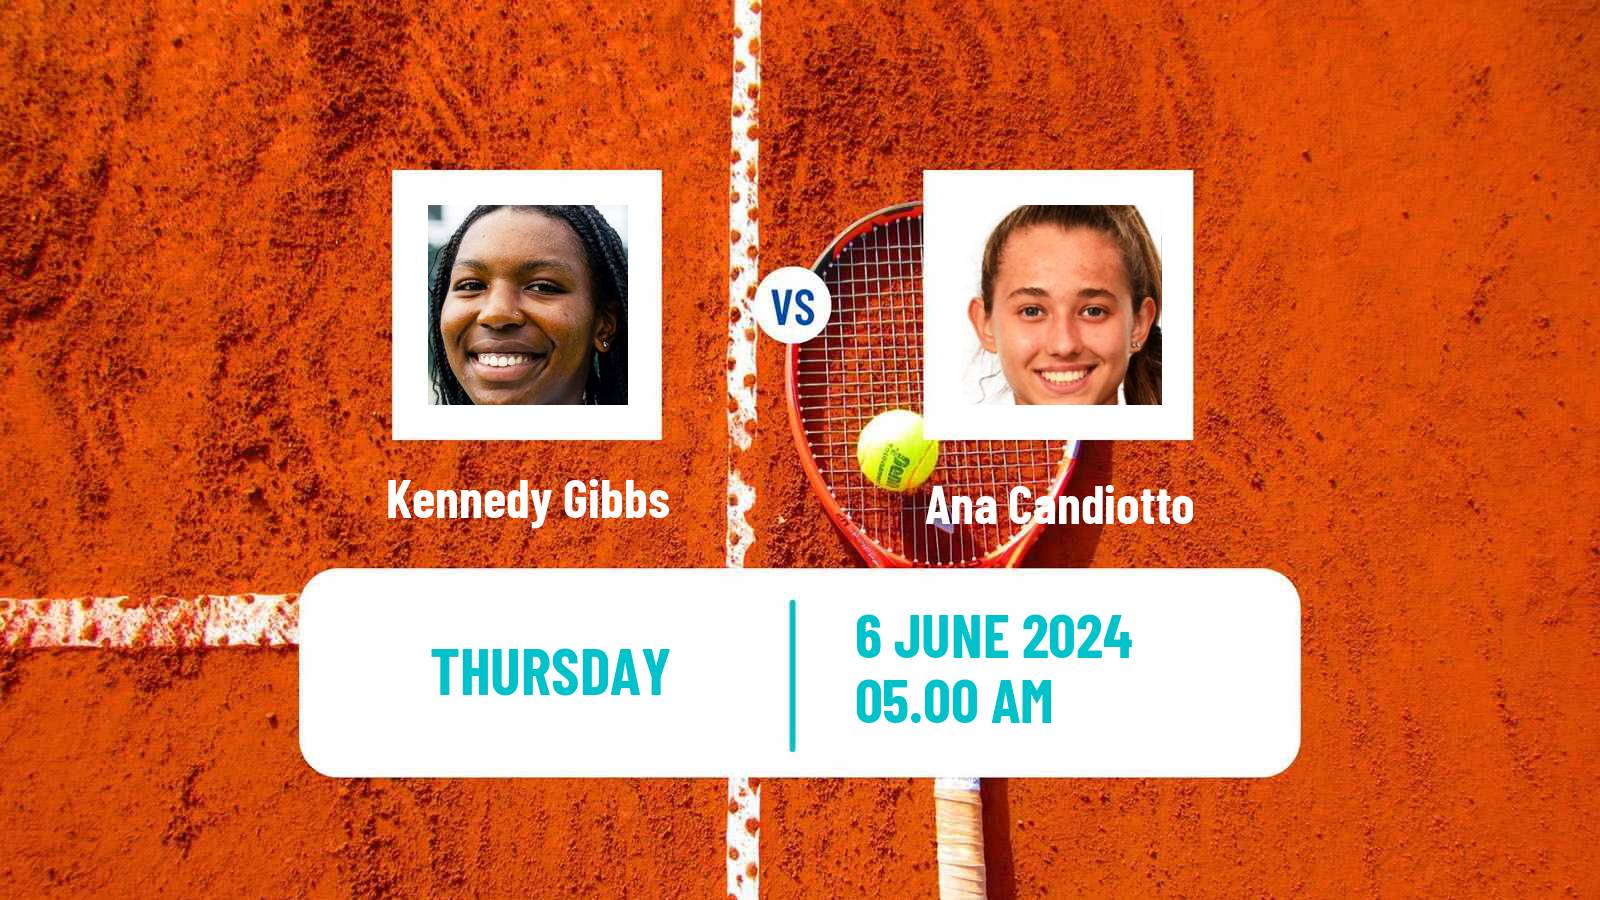 Tennis ITF W15 Madrid Women Kennedy Gibbs - Ana Candiotto